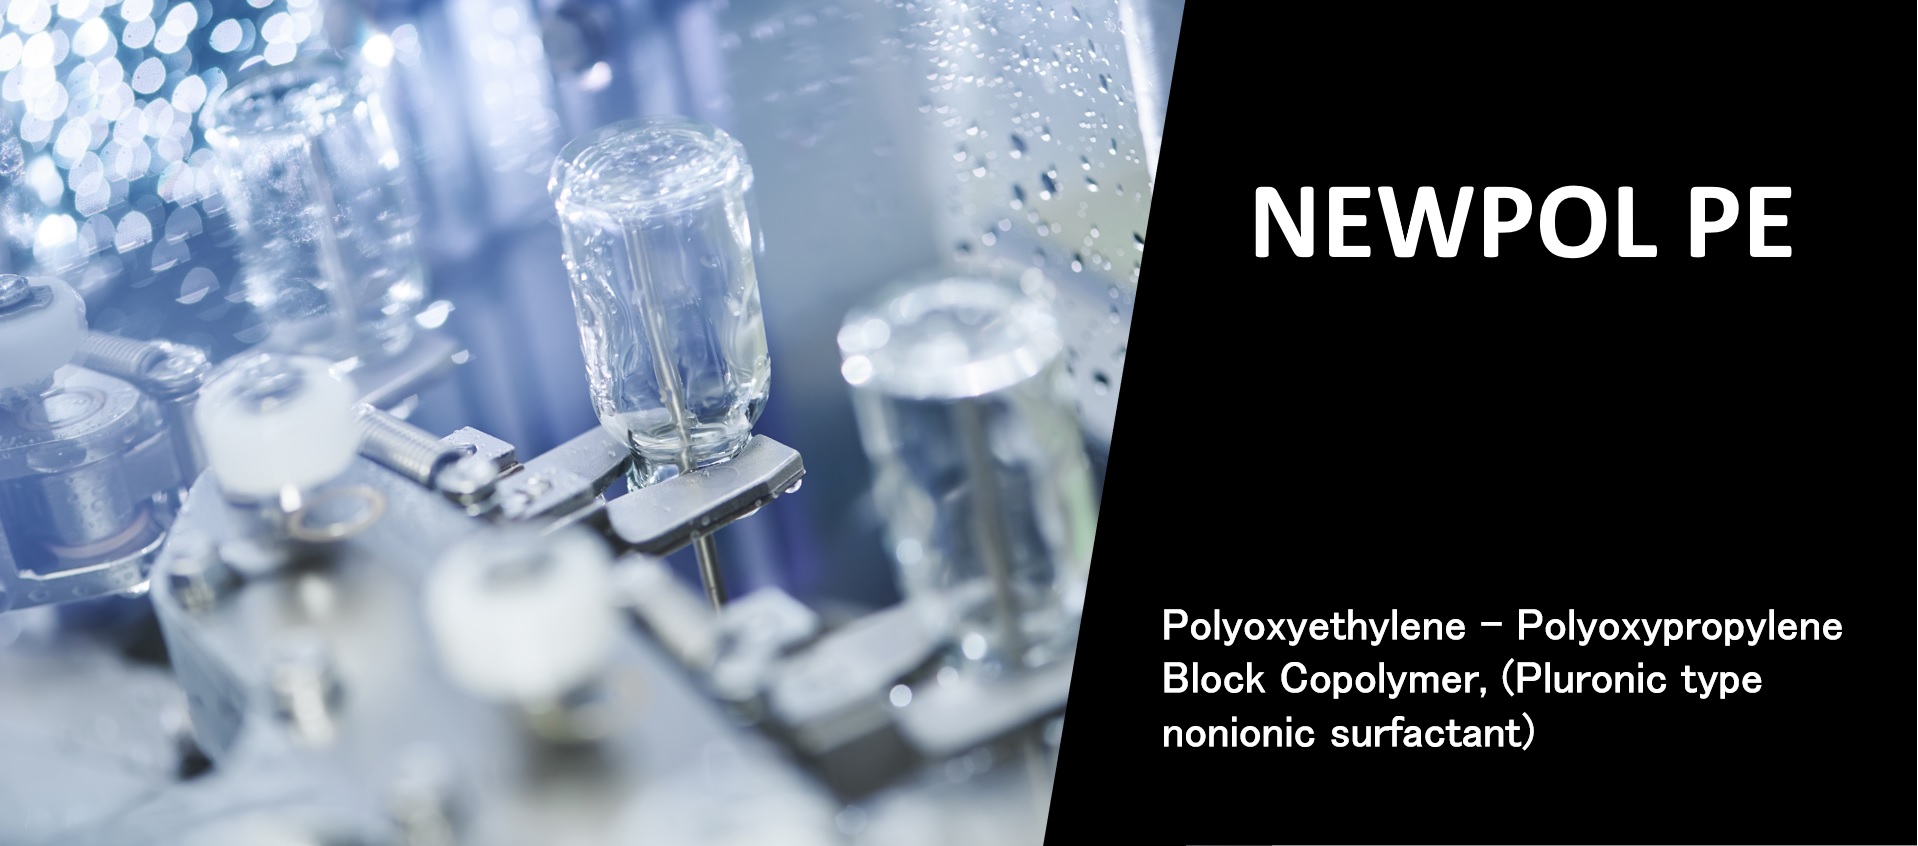 Polyoxyethylene - Polyoxypropylene Block Copolymer,  (Pluronic type nonionic surfactant) "NEWPOL PE" page is now open.
